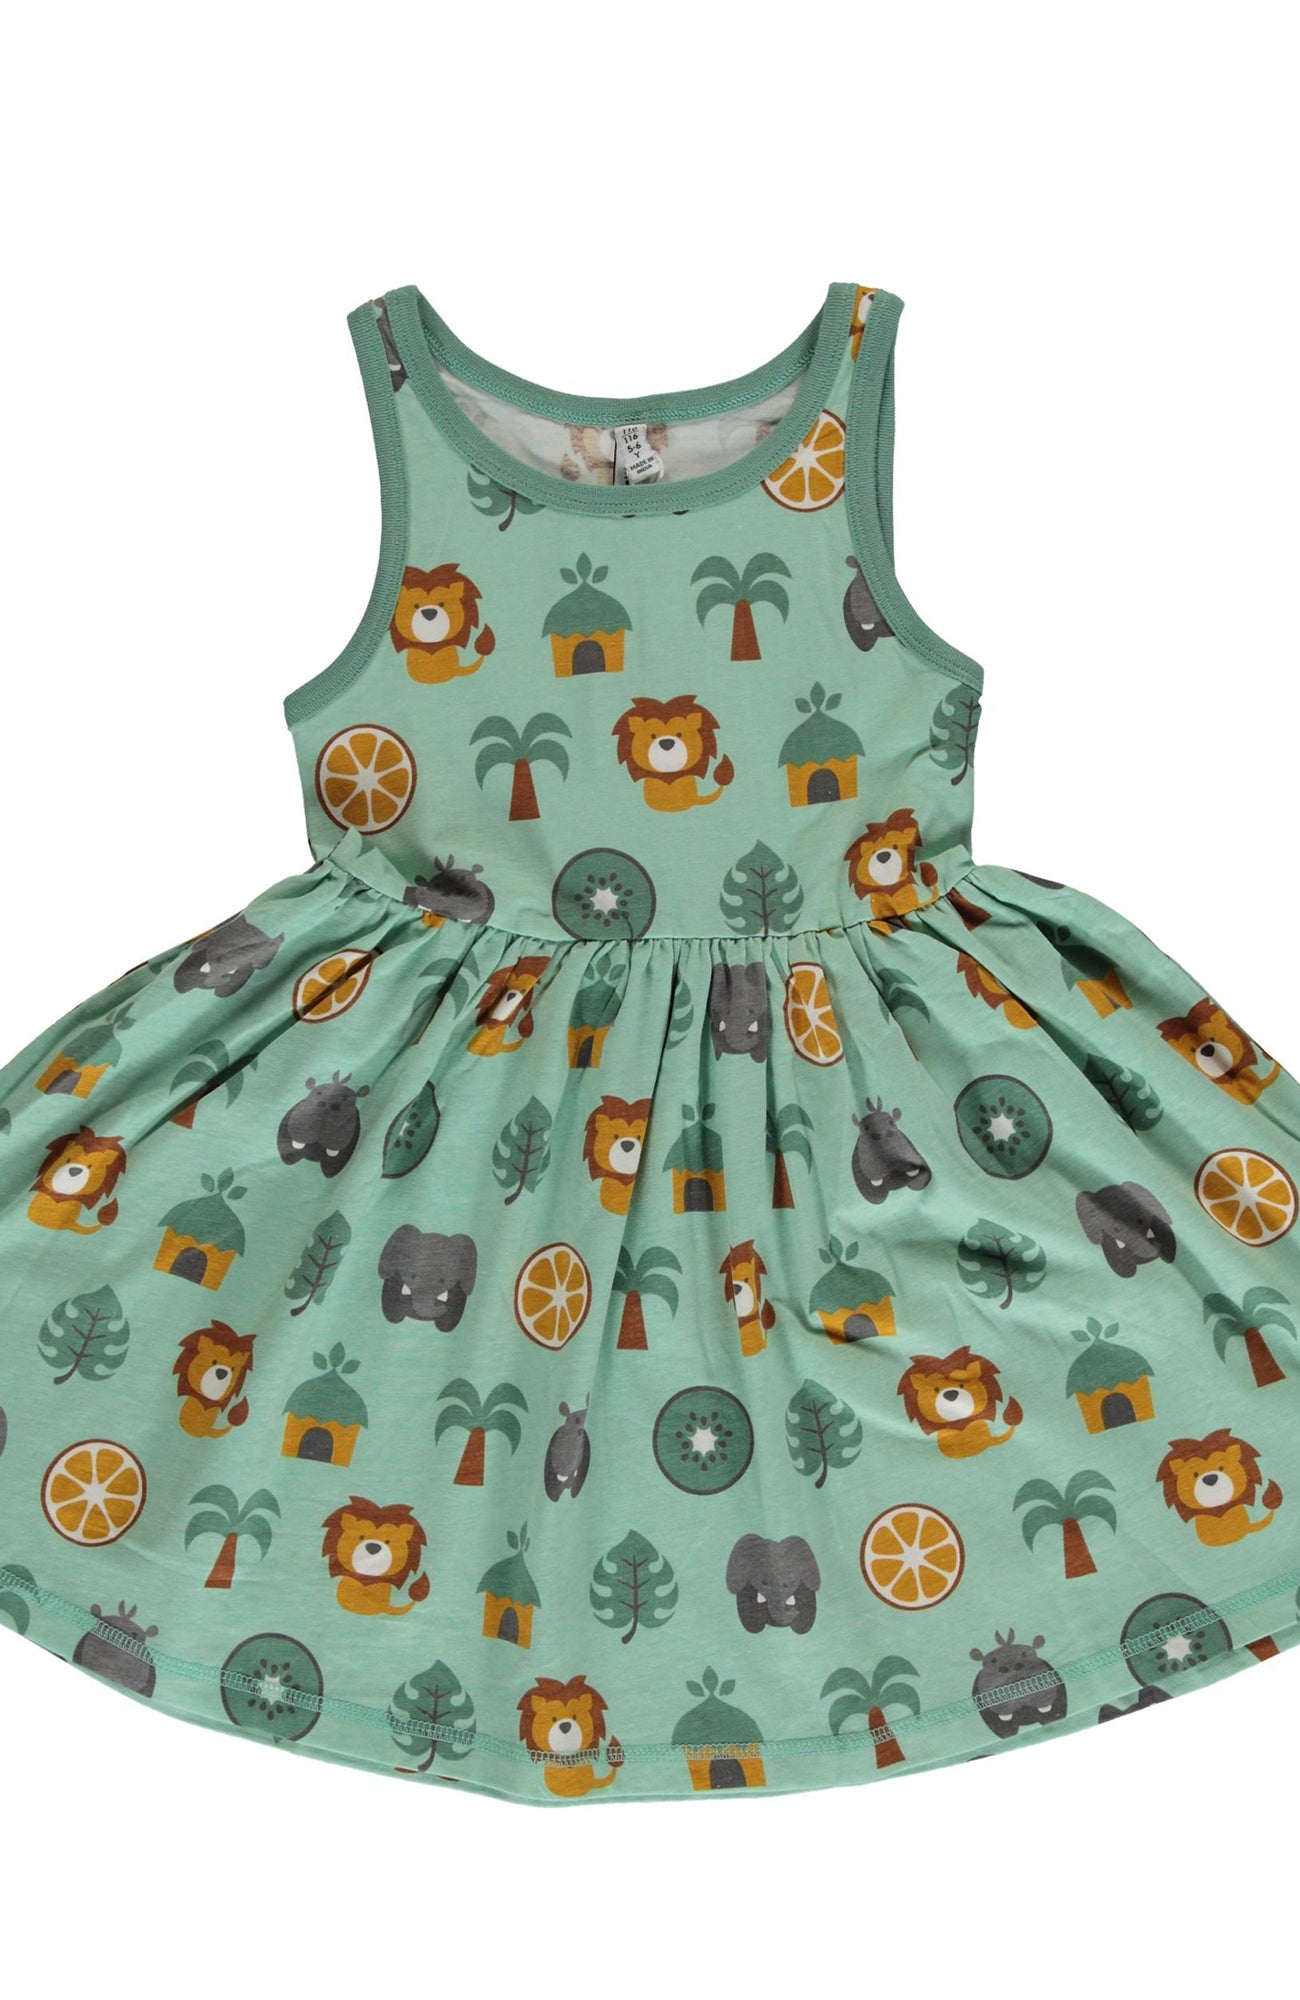 Children's Jungle Spin Dress - Maxomorra (Last Available)